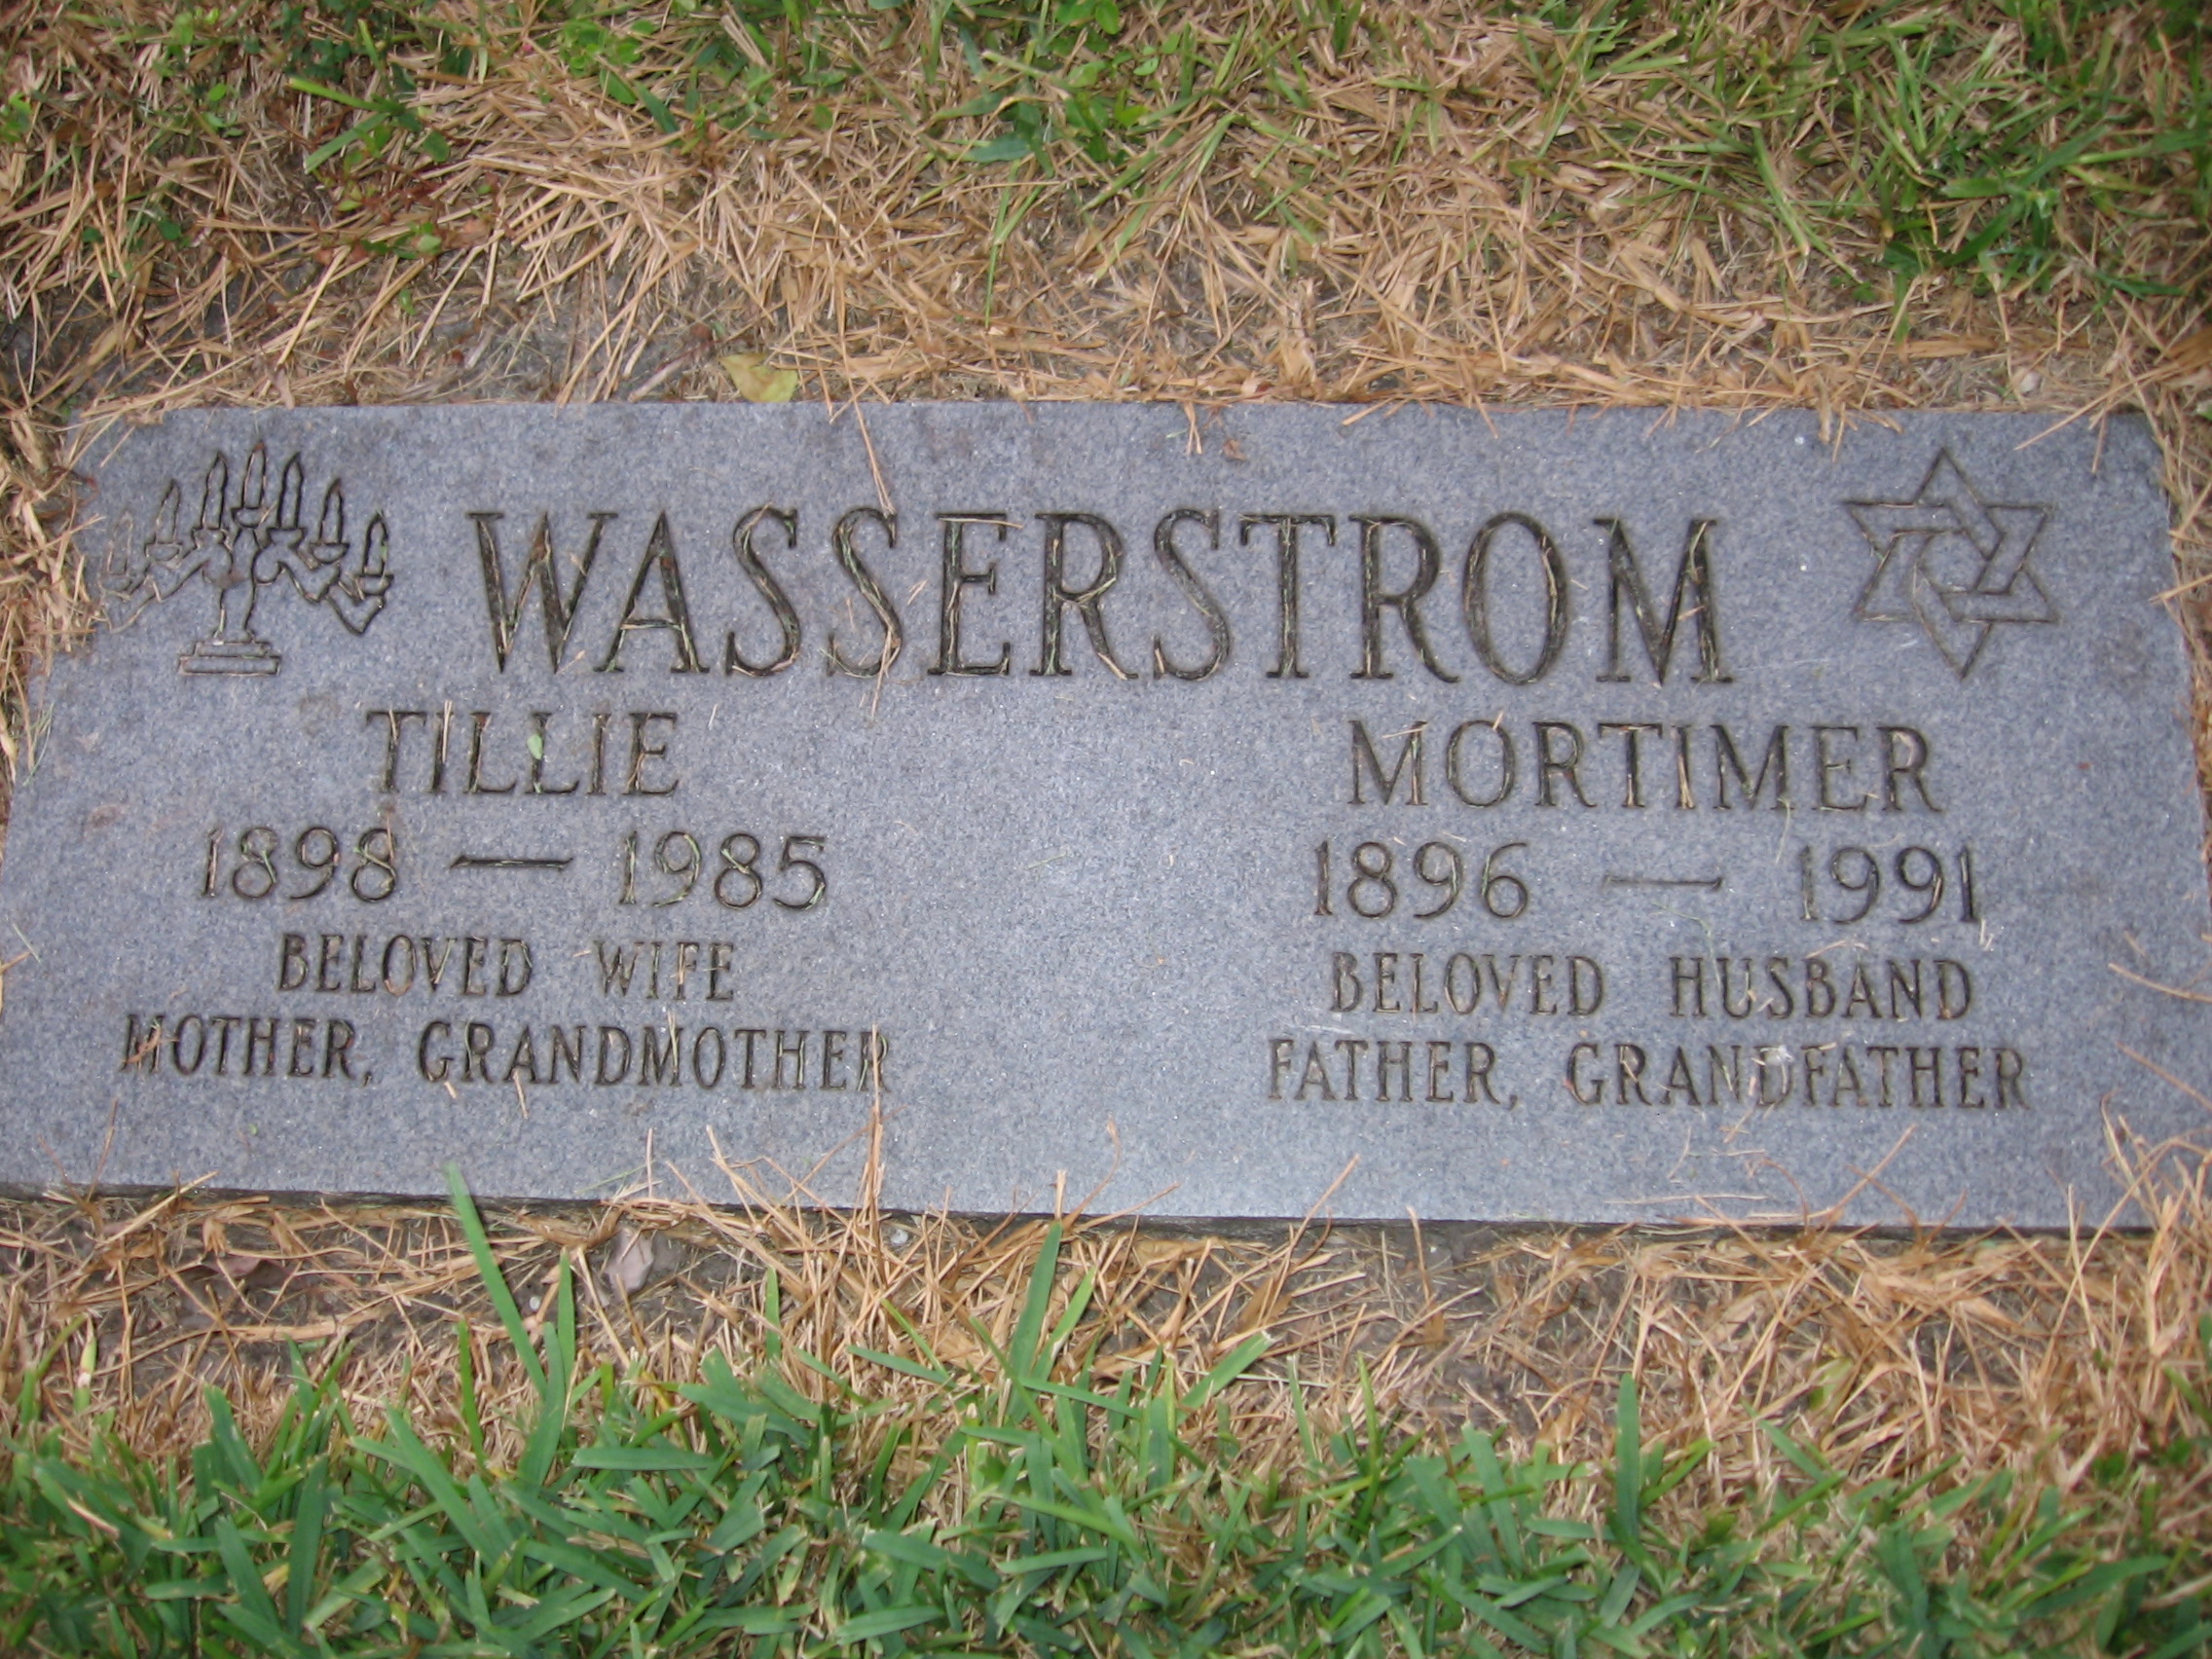 Mortimer Wasserstrom